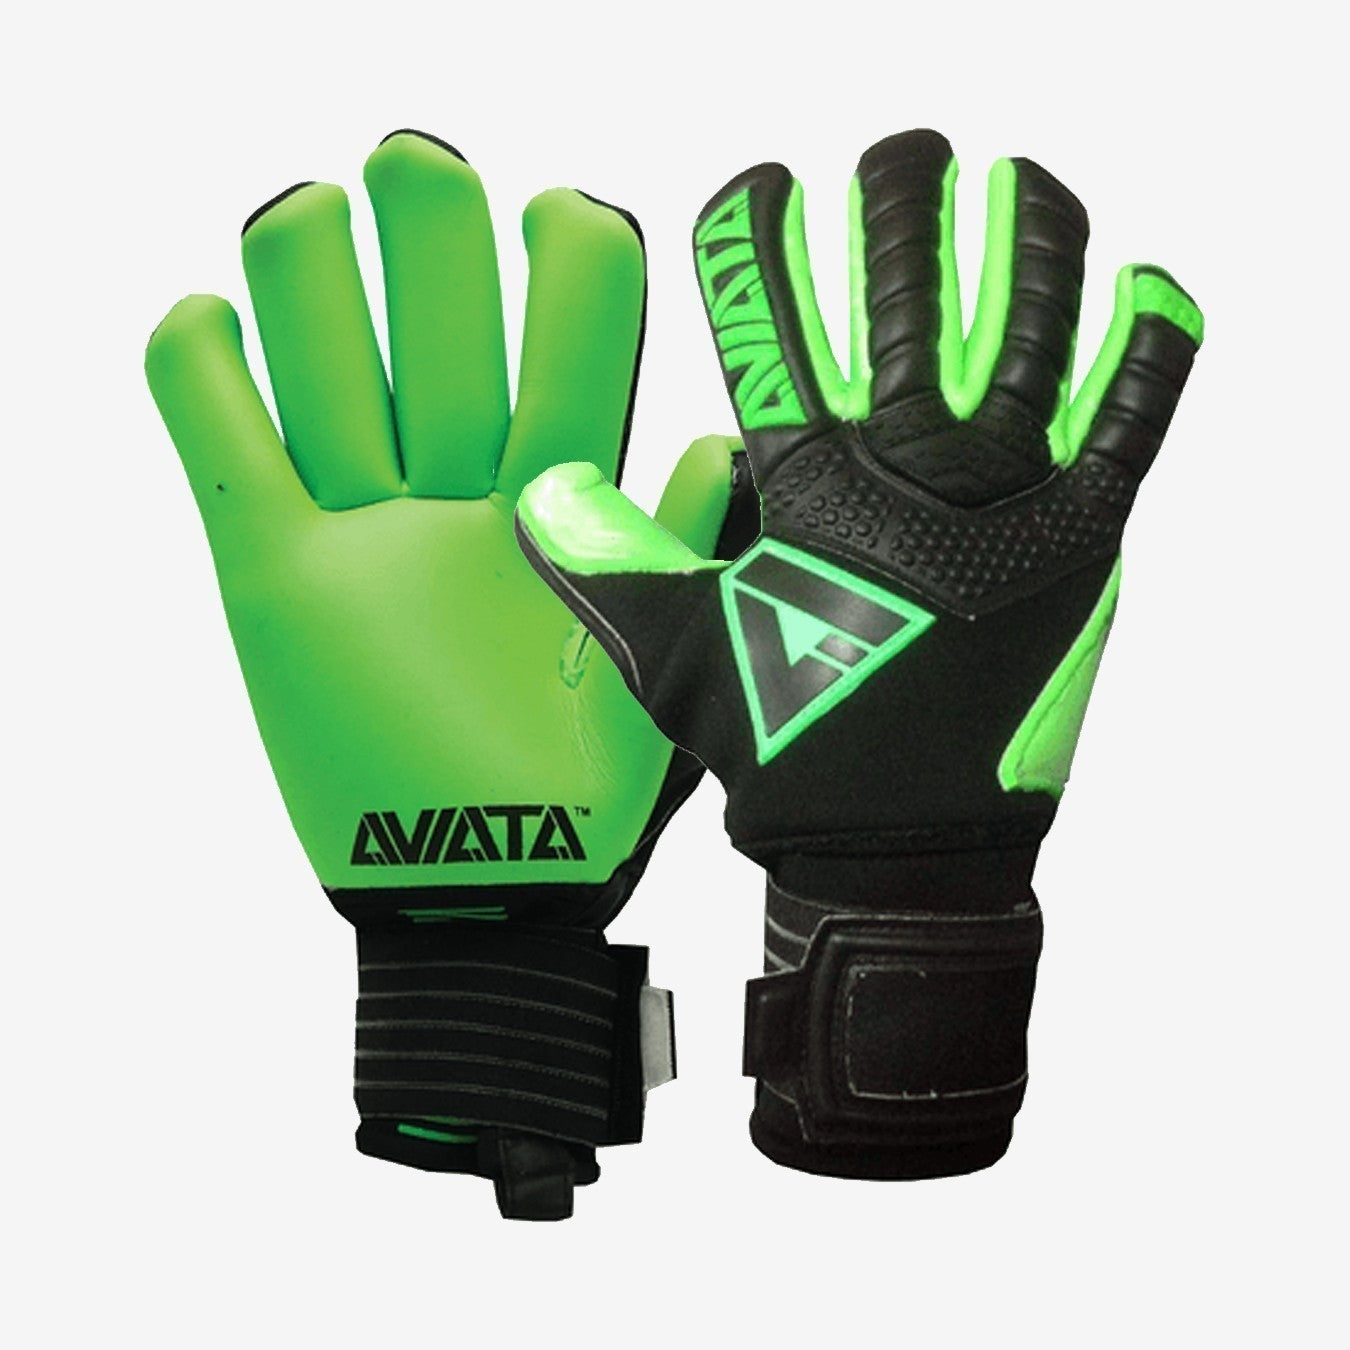 Stretta Special Yeti Edition Negative Cut GK Glove - Green/Black